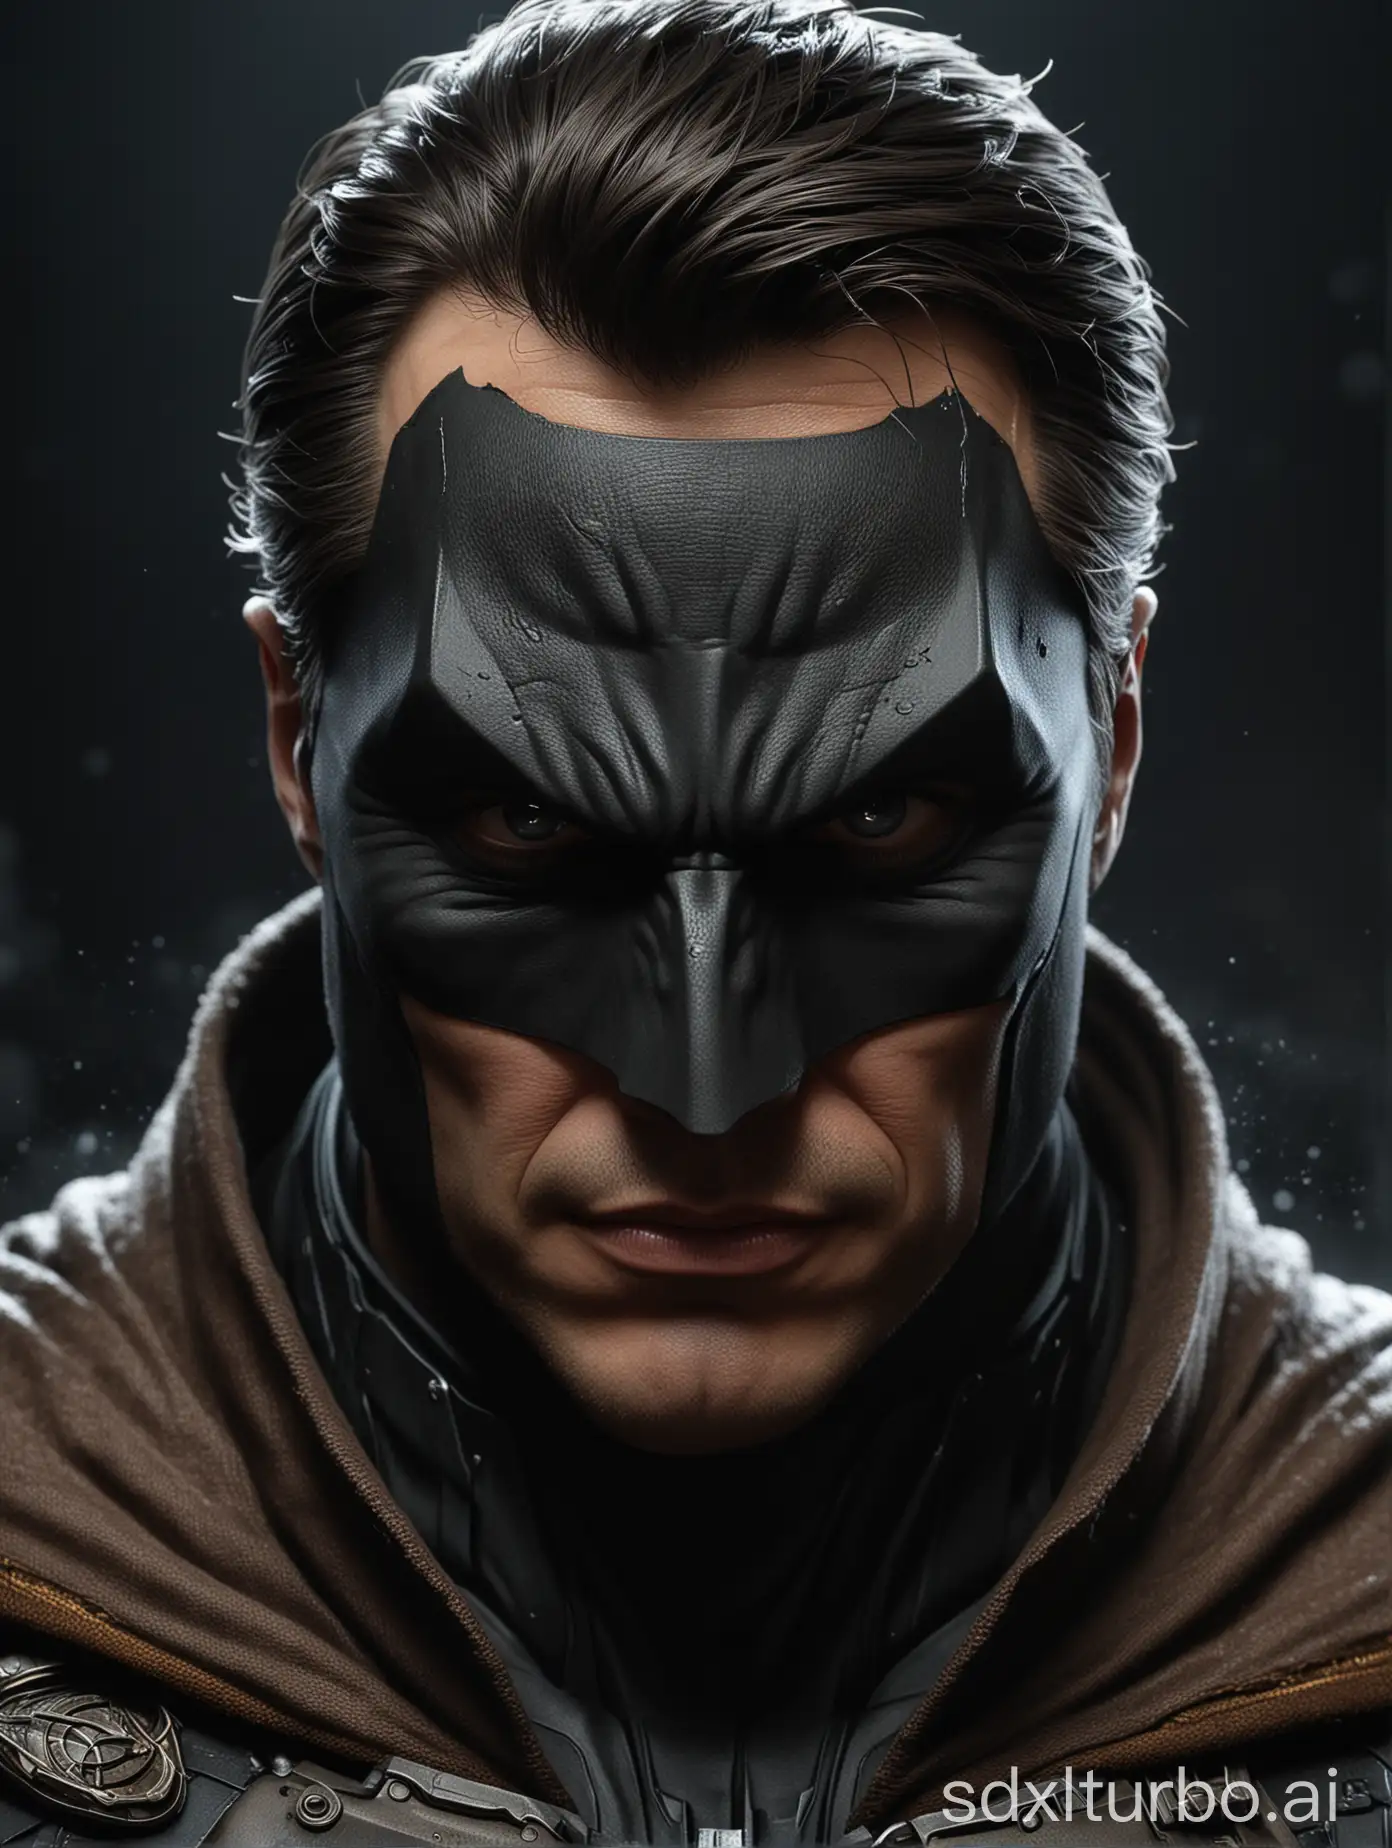 Batman-Begins-Surreal-Fantasy-Portrait-in-Intricate-Photorealistic-Digital-Painting